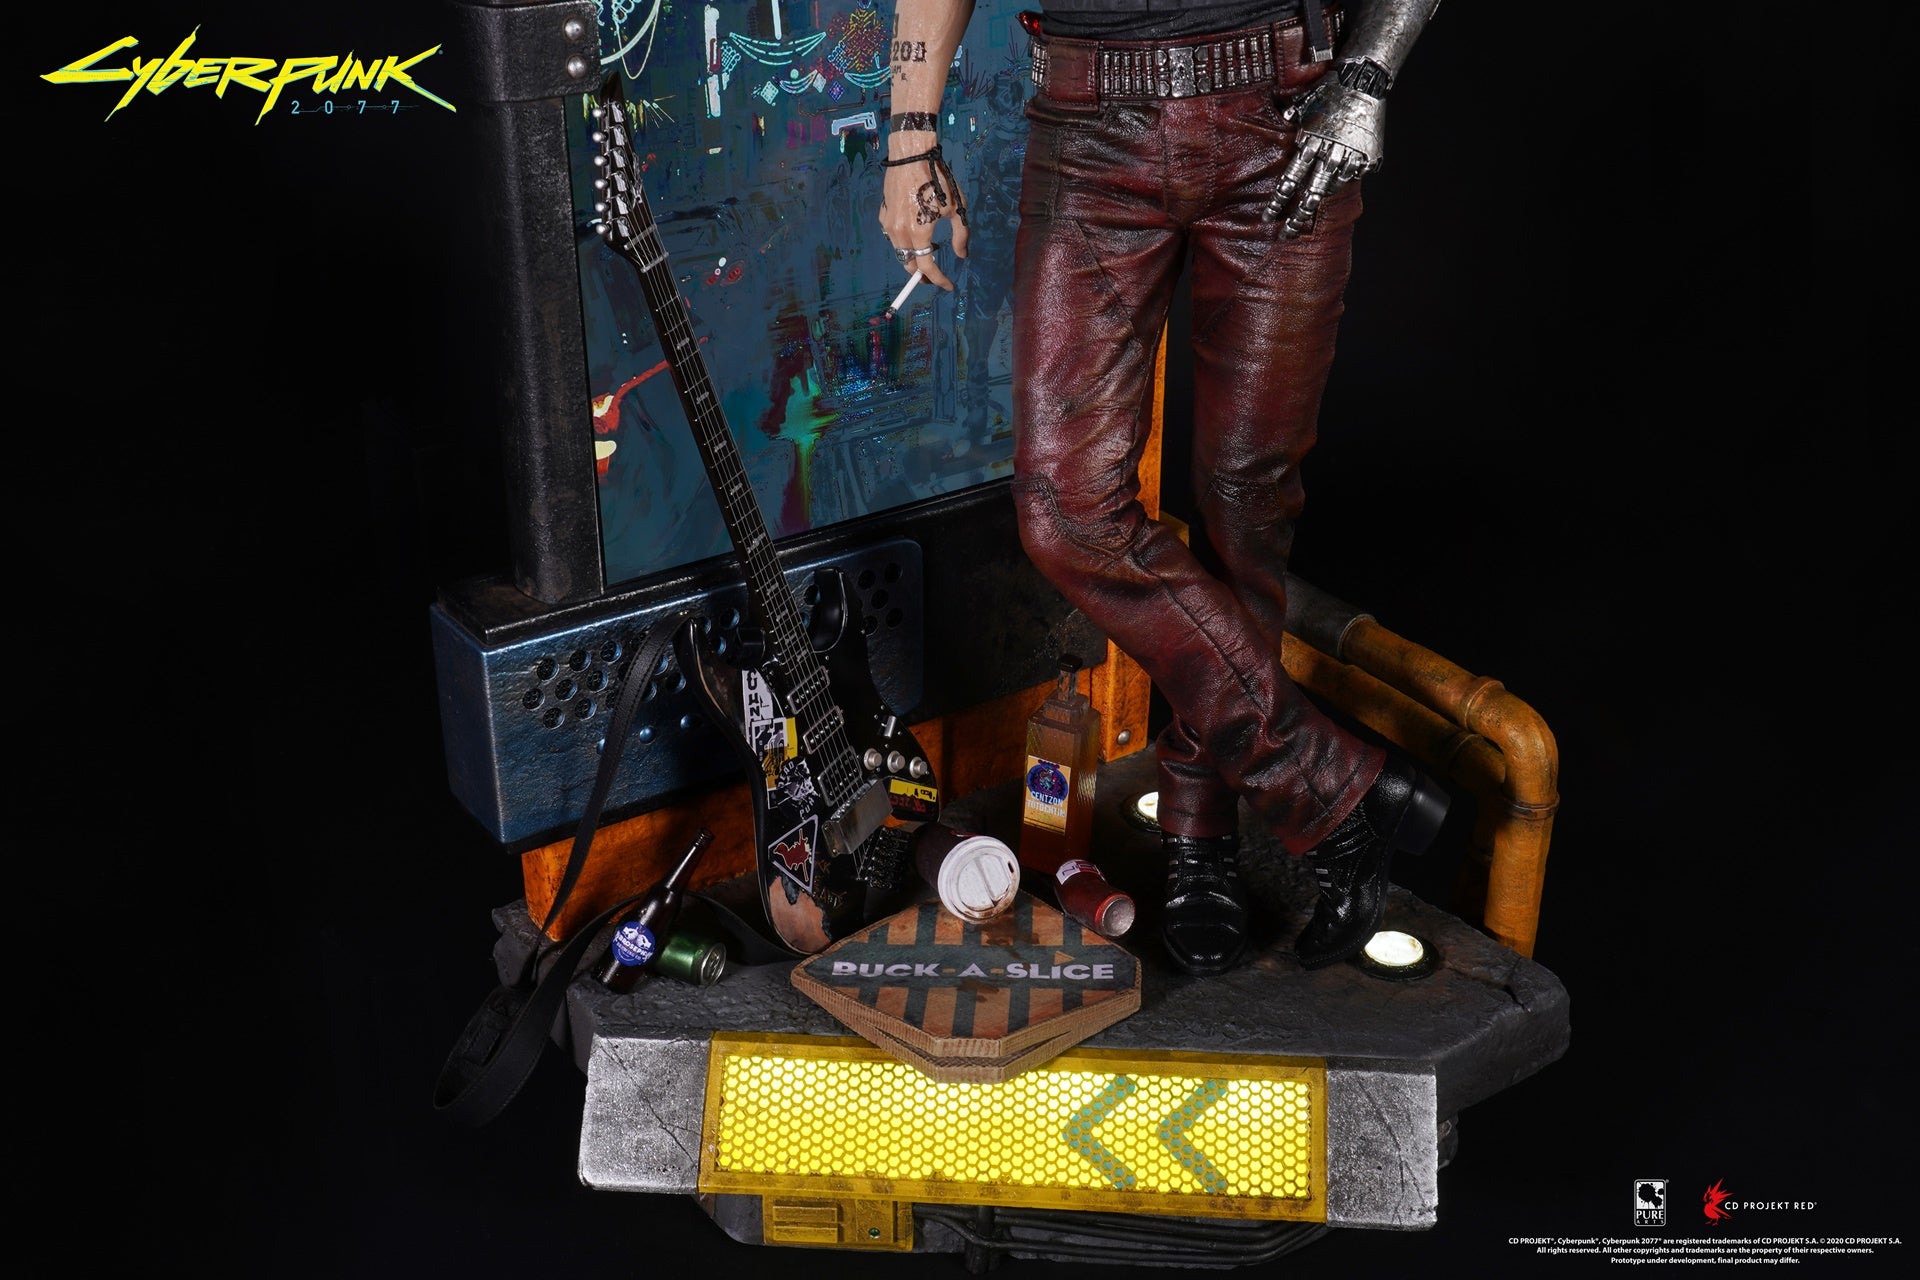 CYBERPUNK 2077 JOHNNY AND ALT FIGURE  CYBERPUNK Statue Collectibles – CD  PROJEKT RED Gear Store - USA